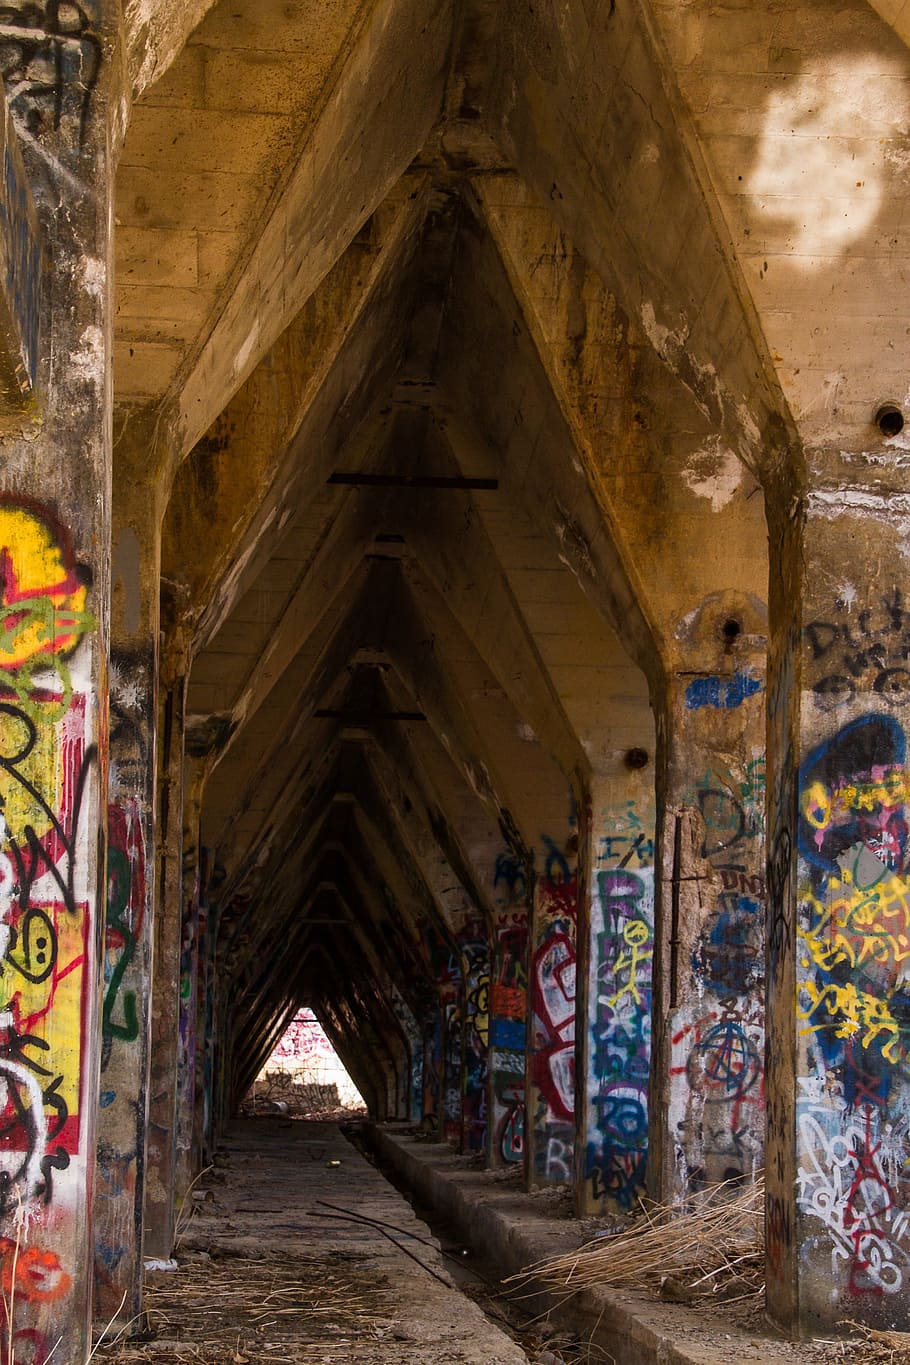 graffiti, ruin, old, abandoned, paint, deserted, hallway, corridor, dilapidated, decrepit